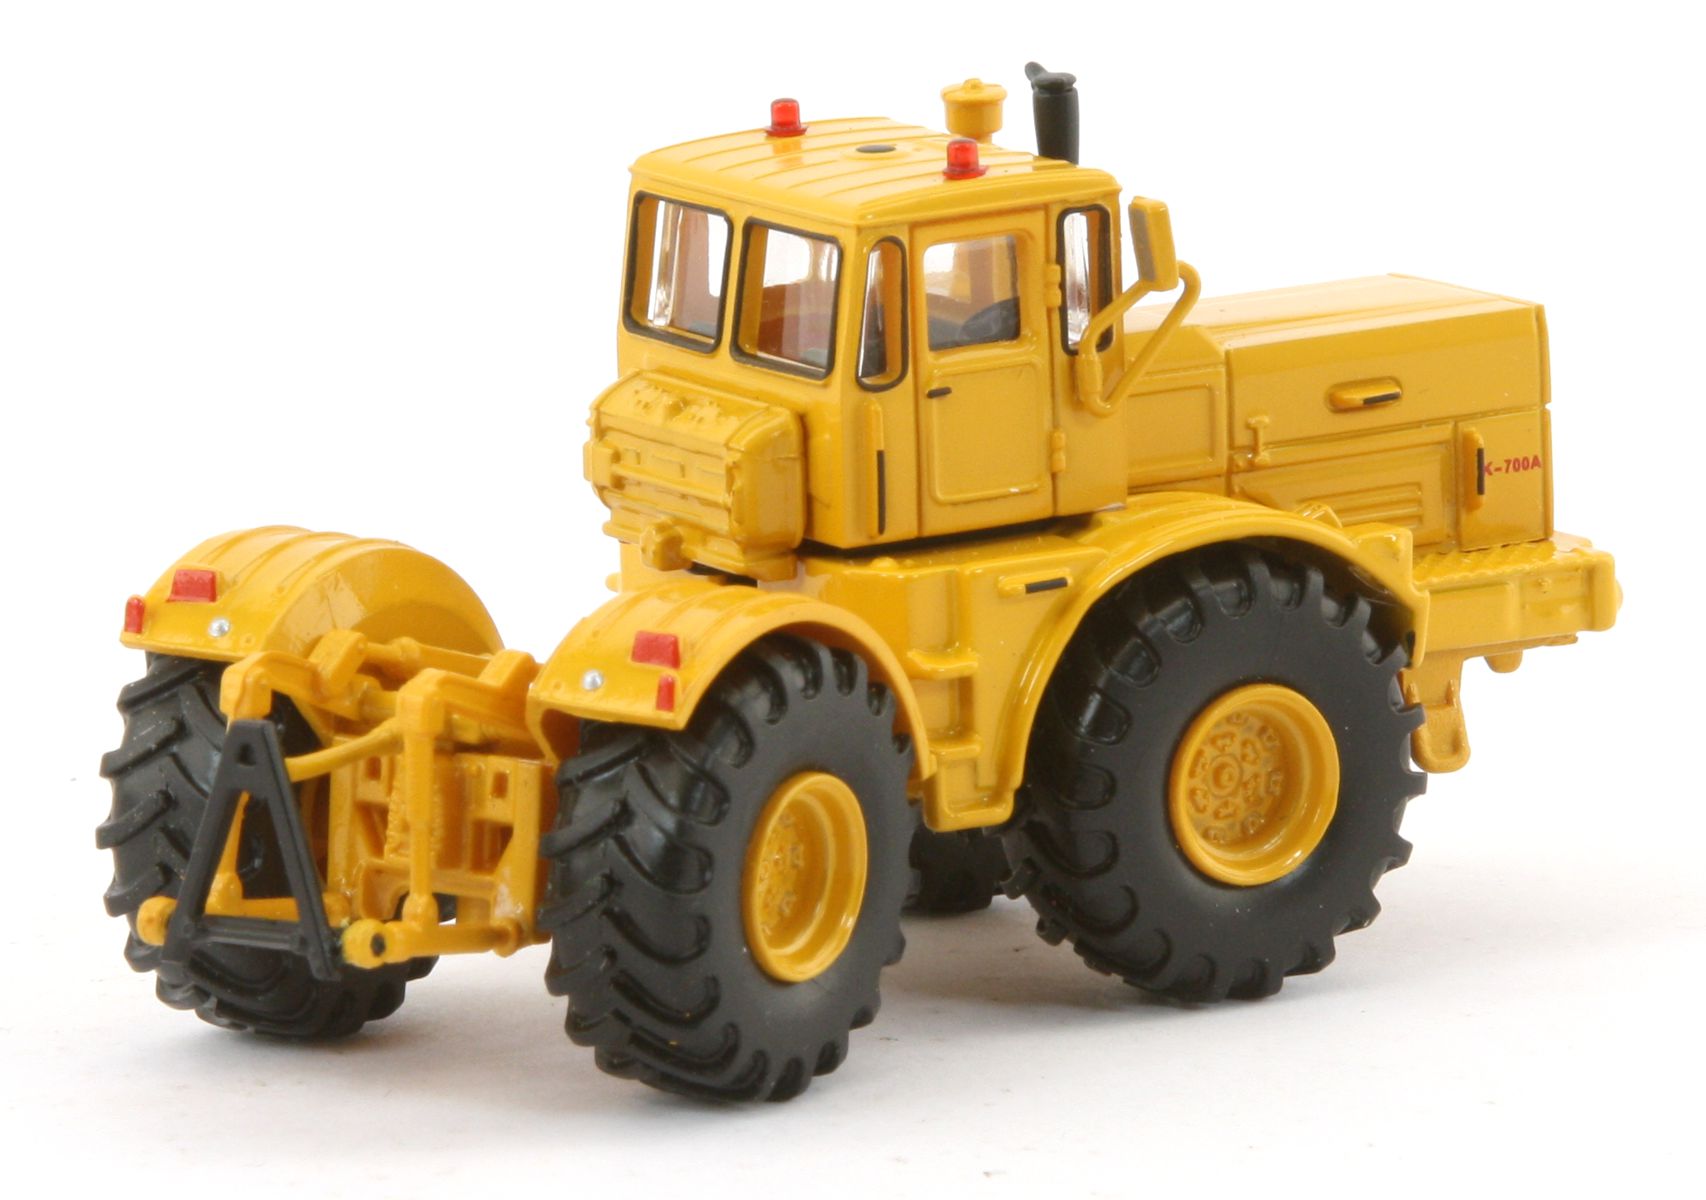 Schuco 452672500 - Traktor Kirovets K-700A, maisgelb RAL 1006